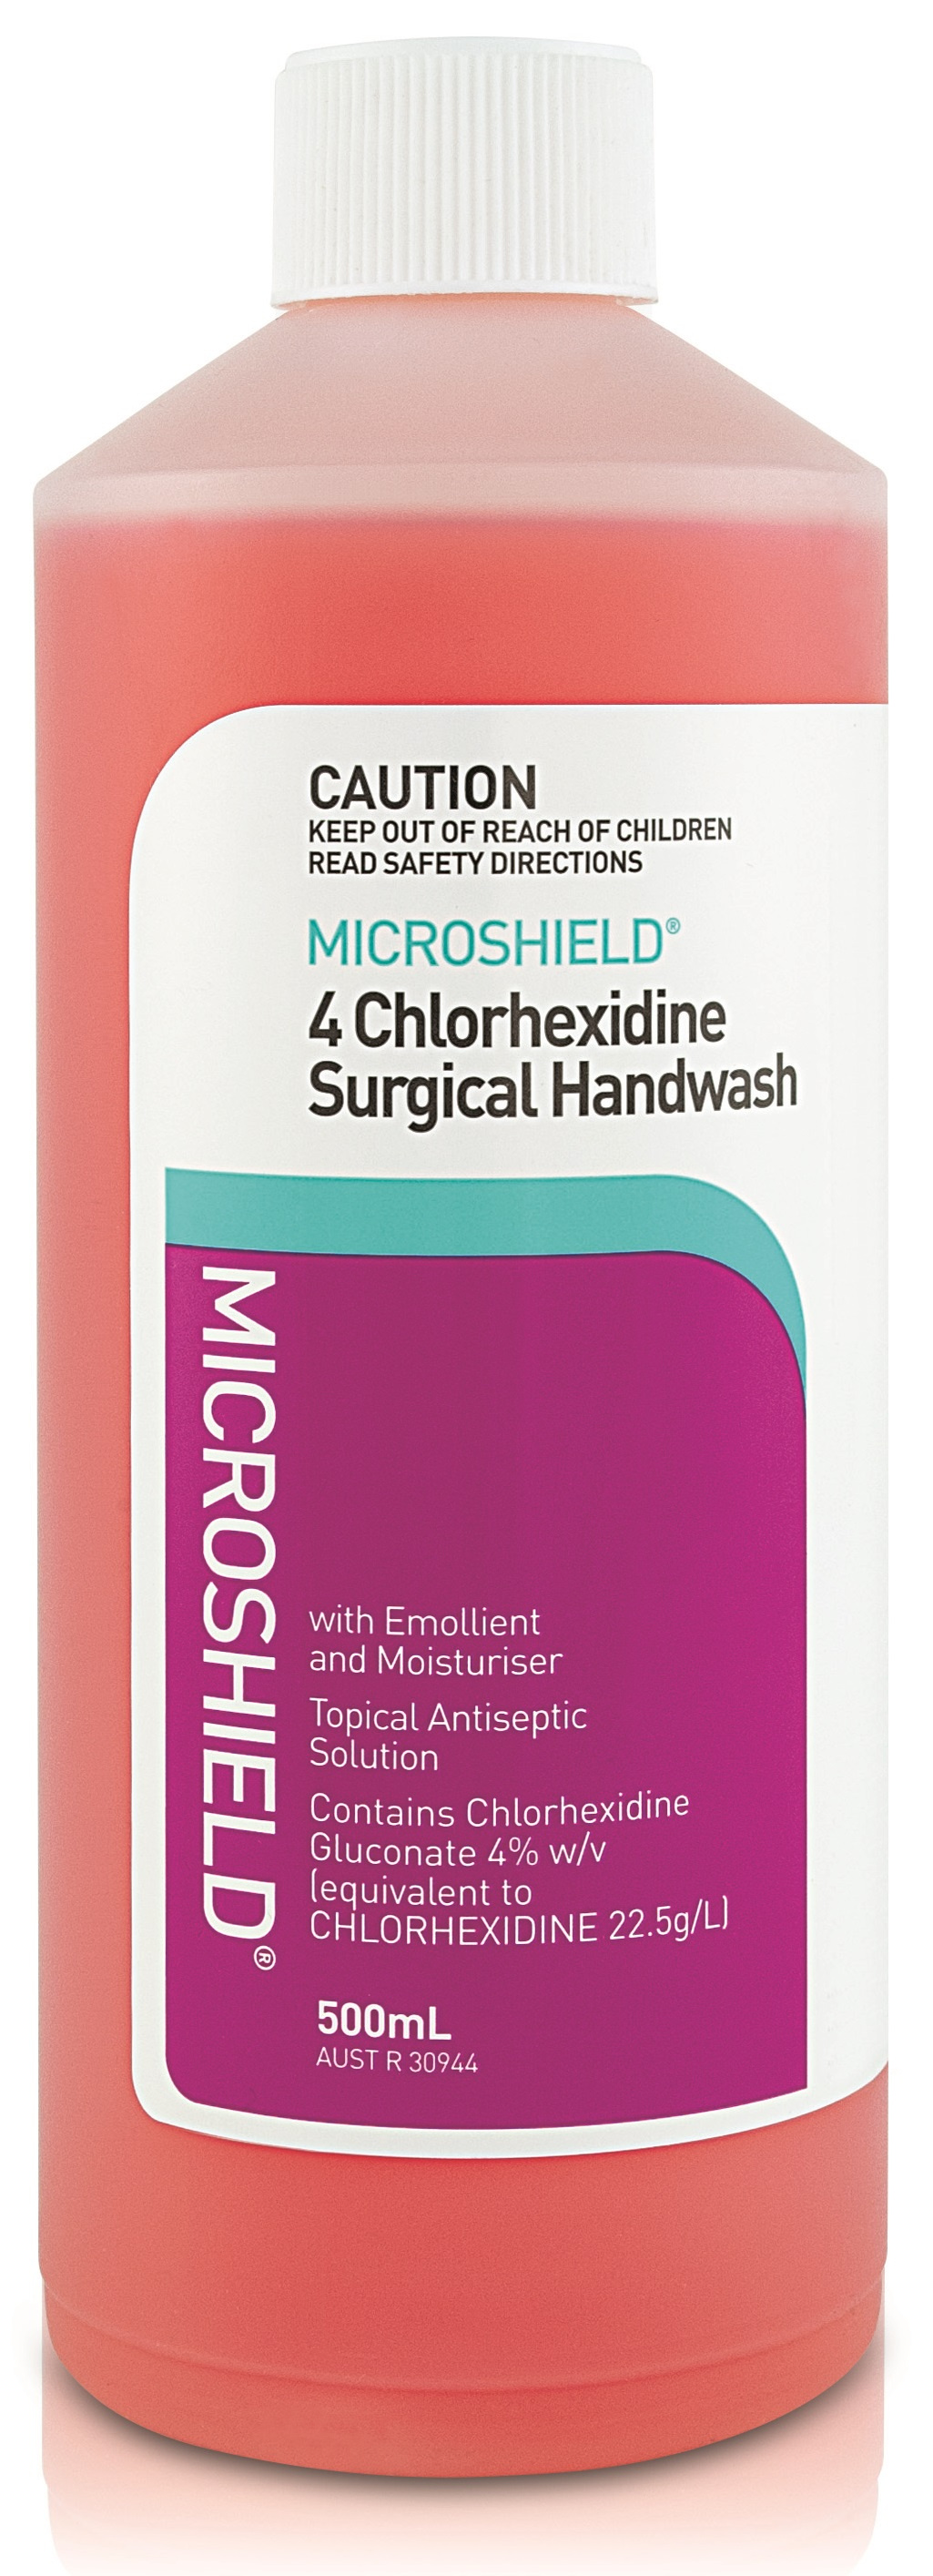 Microshield 4% Chlorhexidine Surgical Handwash 500ml